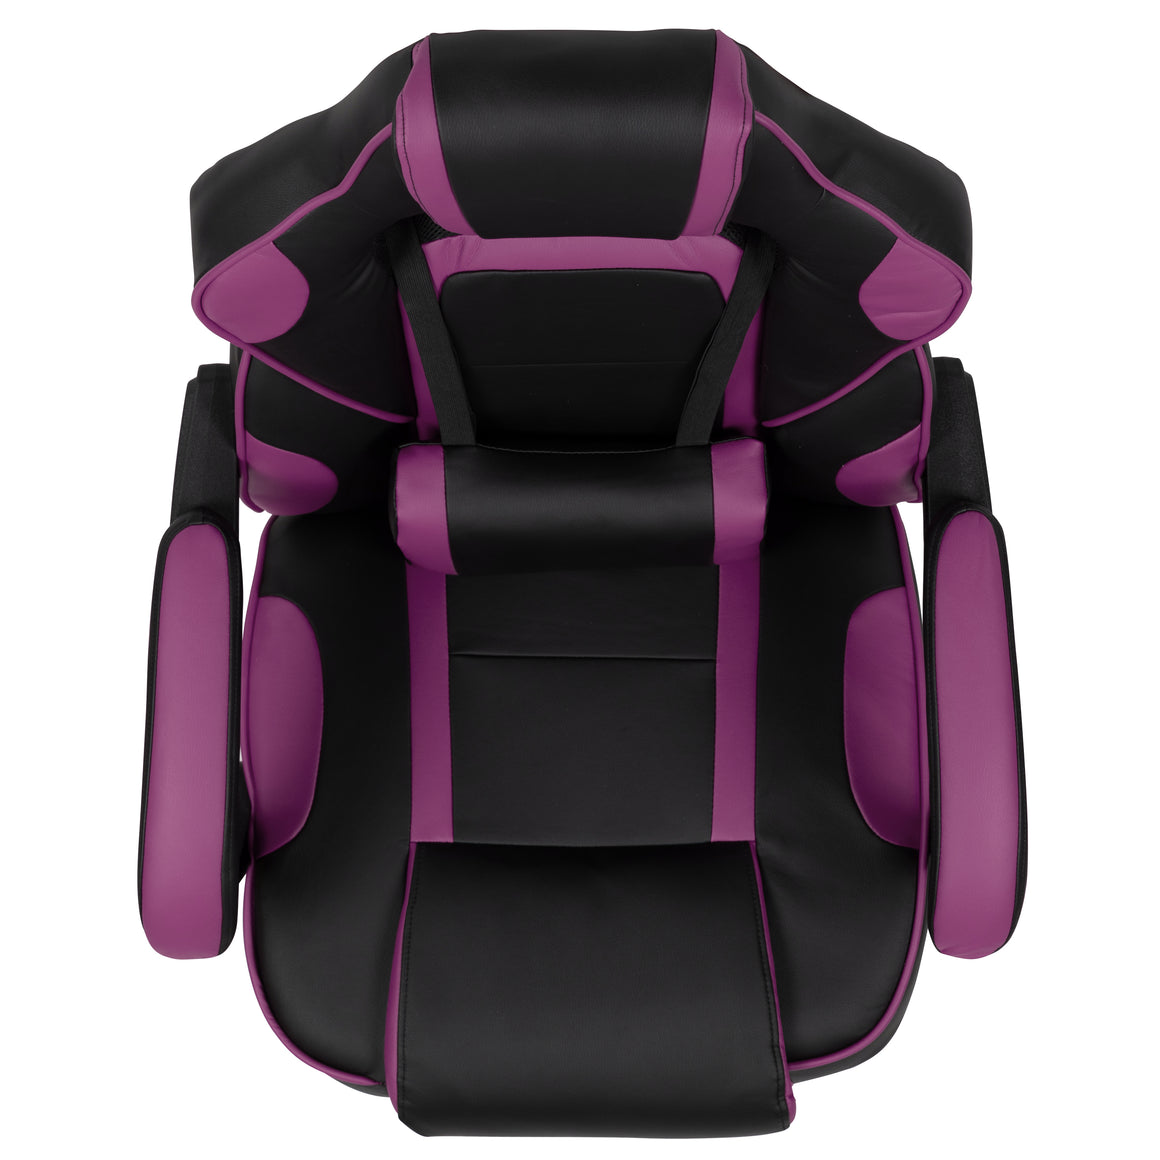 Gaming Racing Ergonomic Computer Chair - X40 Purple - Man Cave Boutique